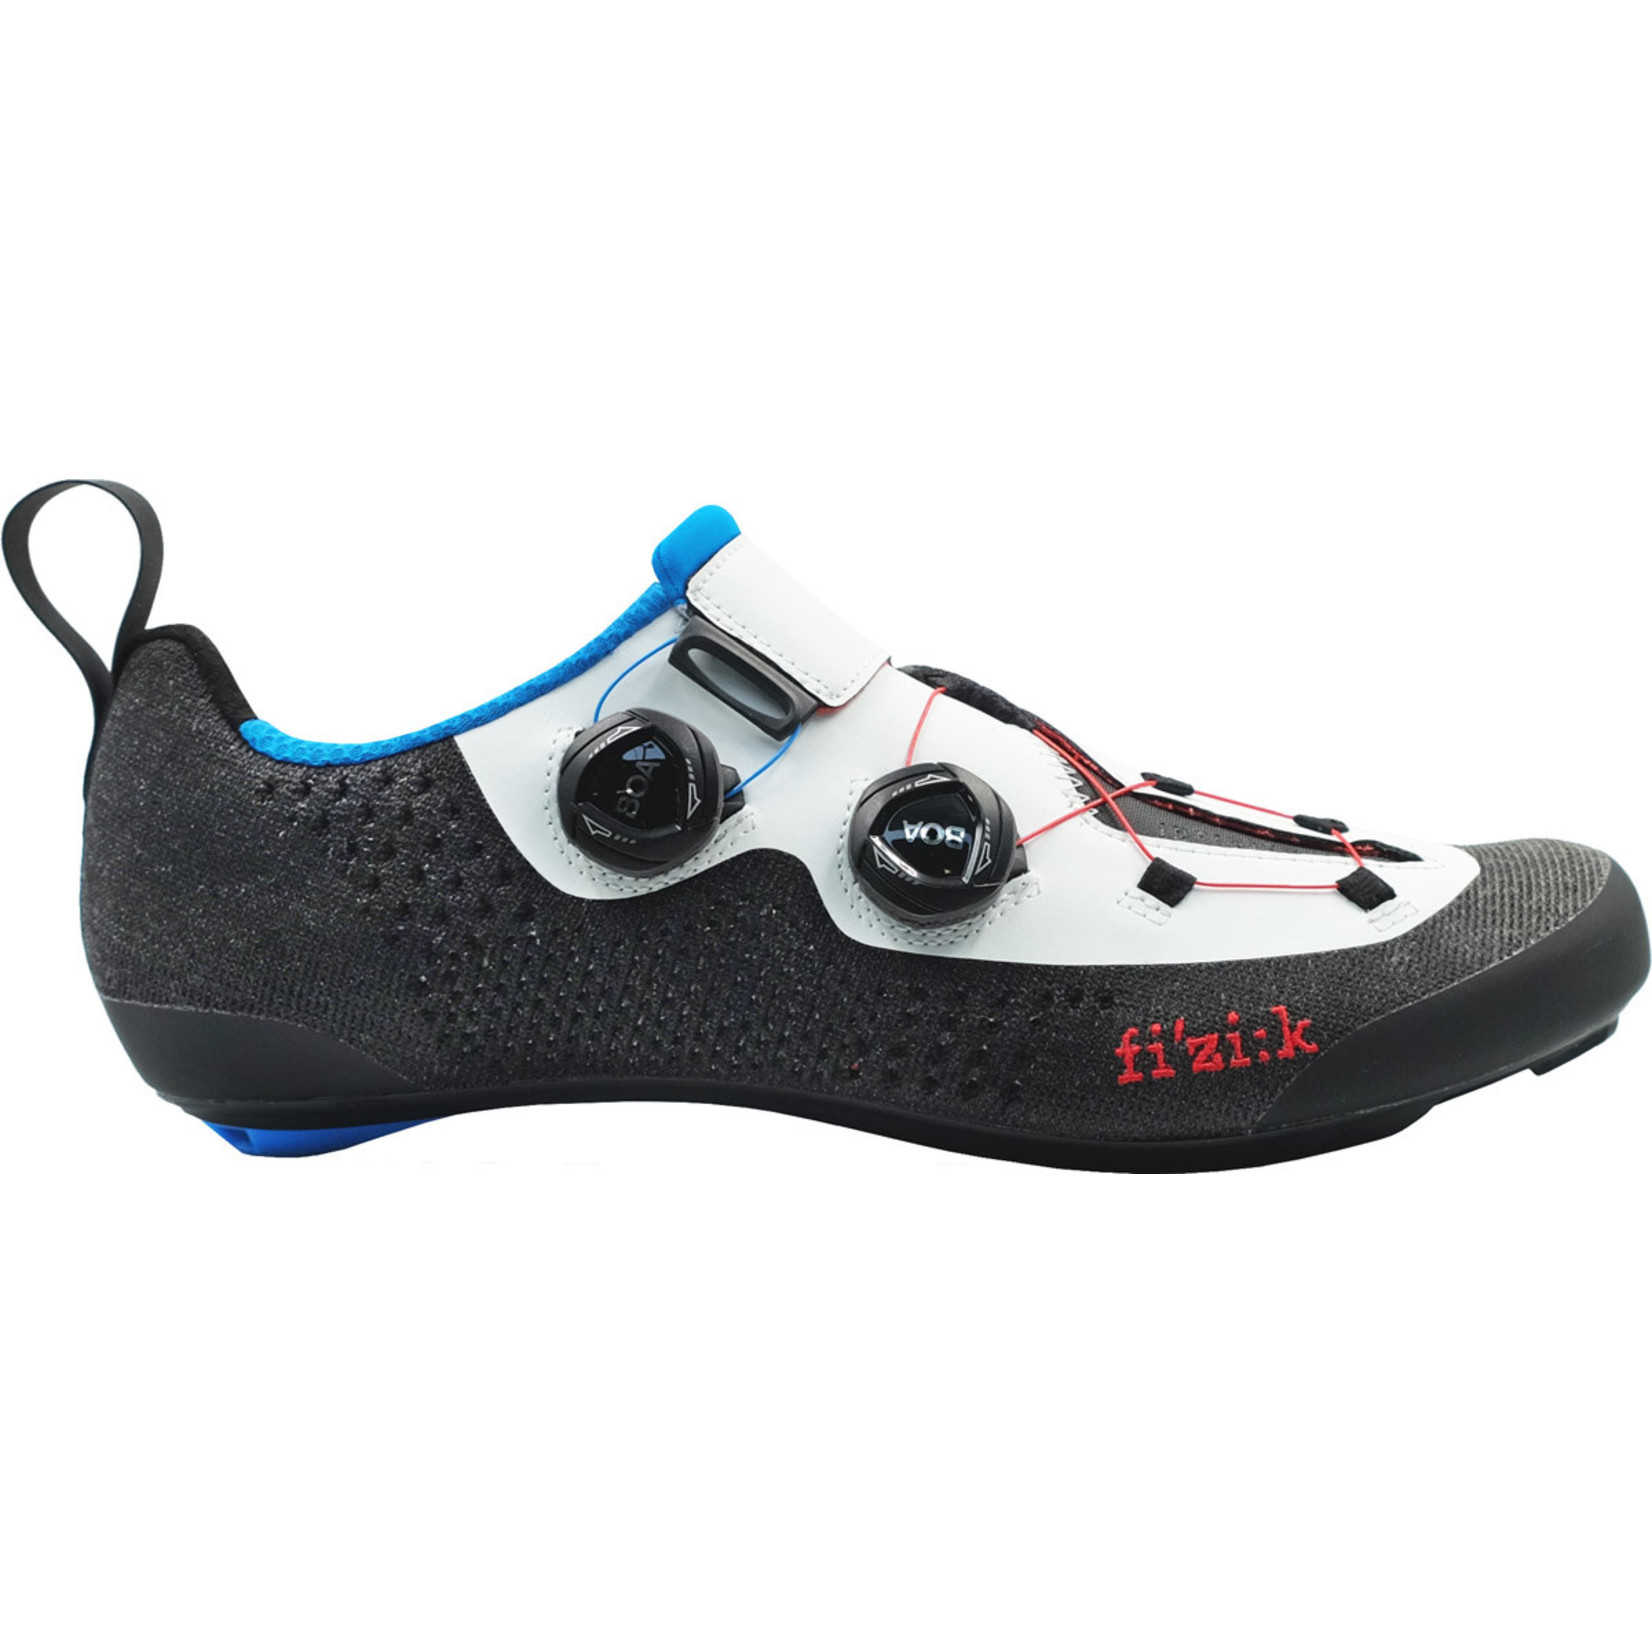 Fizik Fizik Transiro R1 Infinito Knit Full Carbon Bike/Cycling Shoes - Black/White